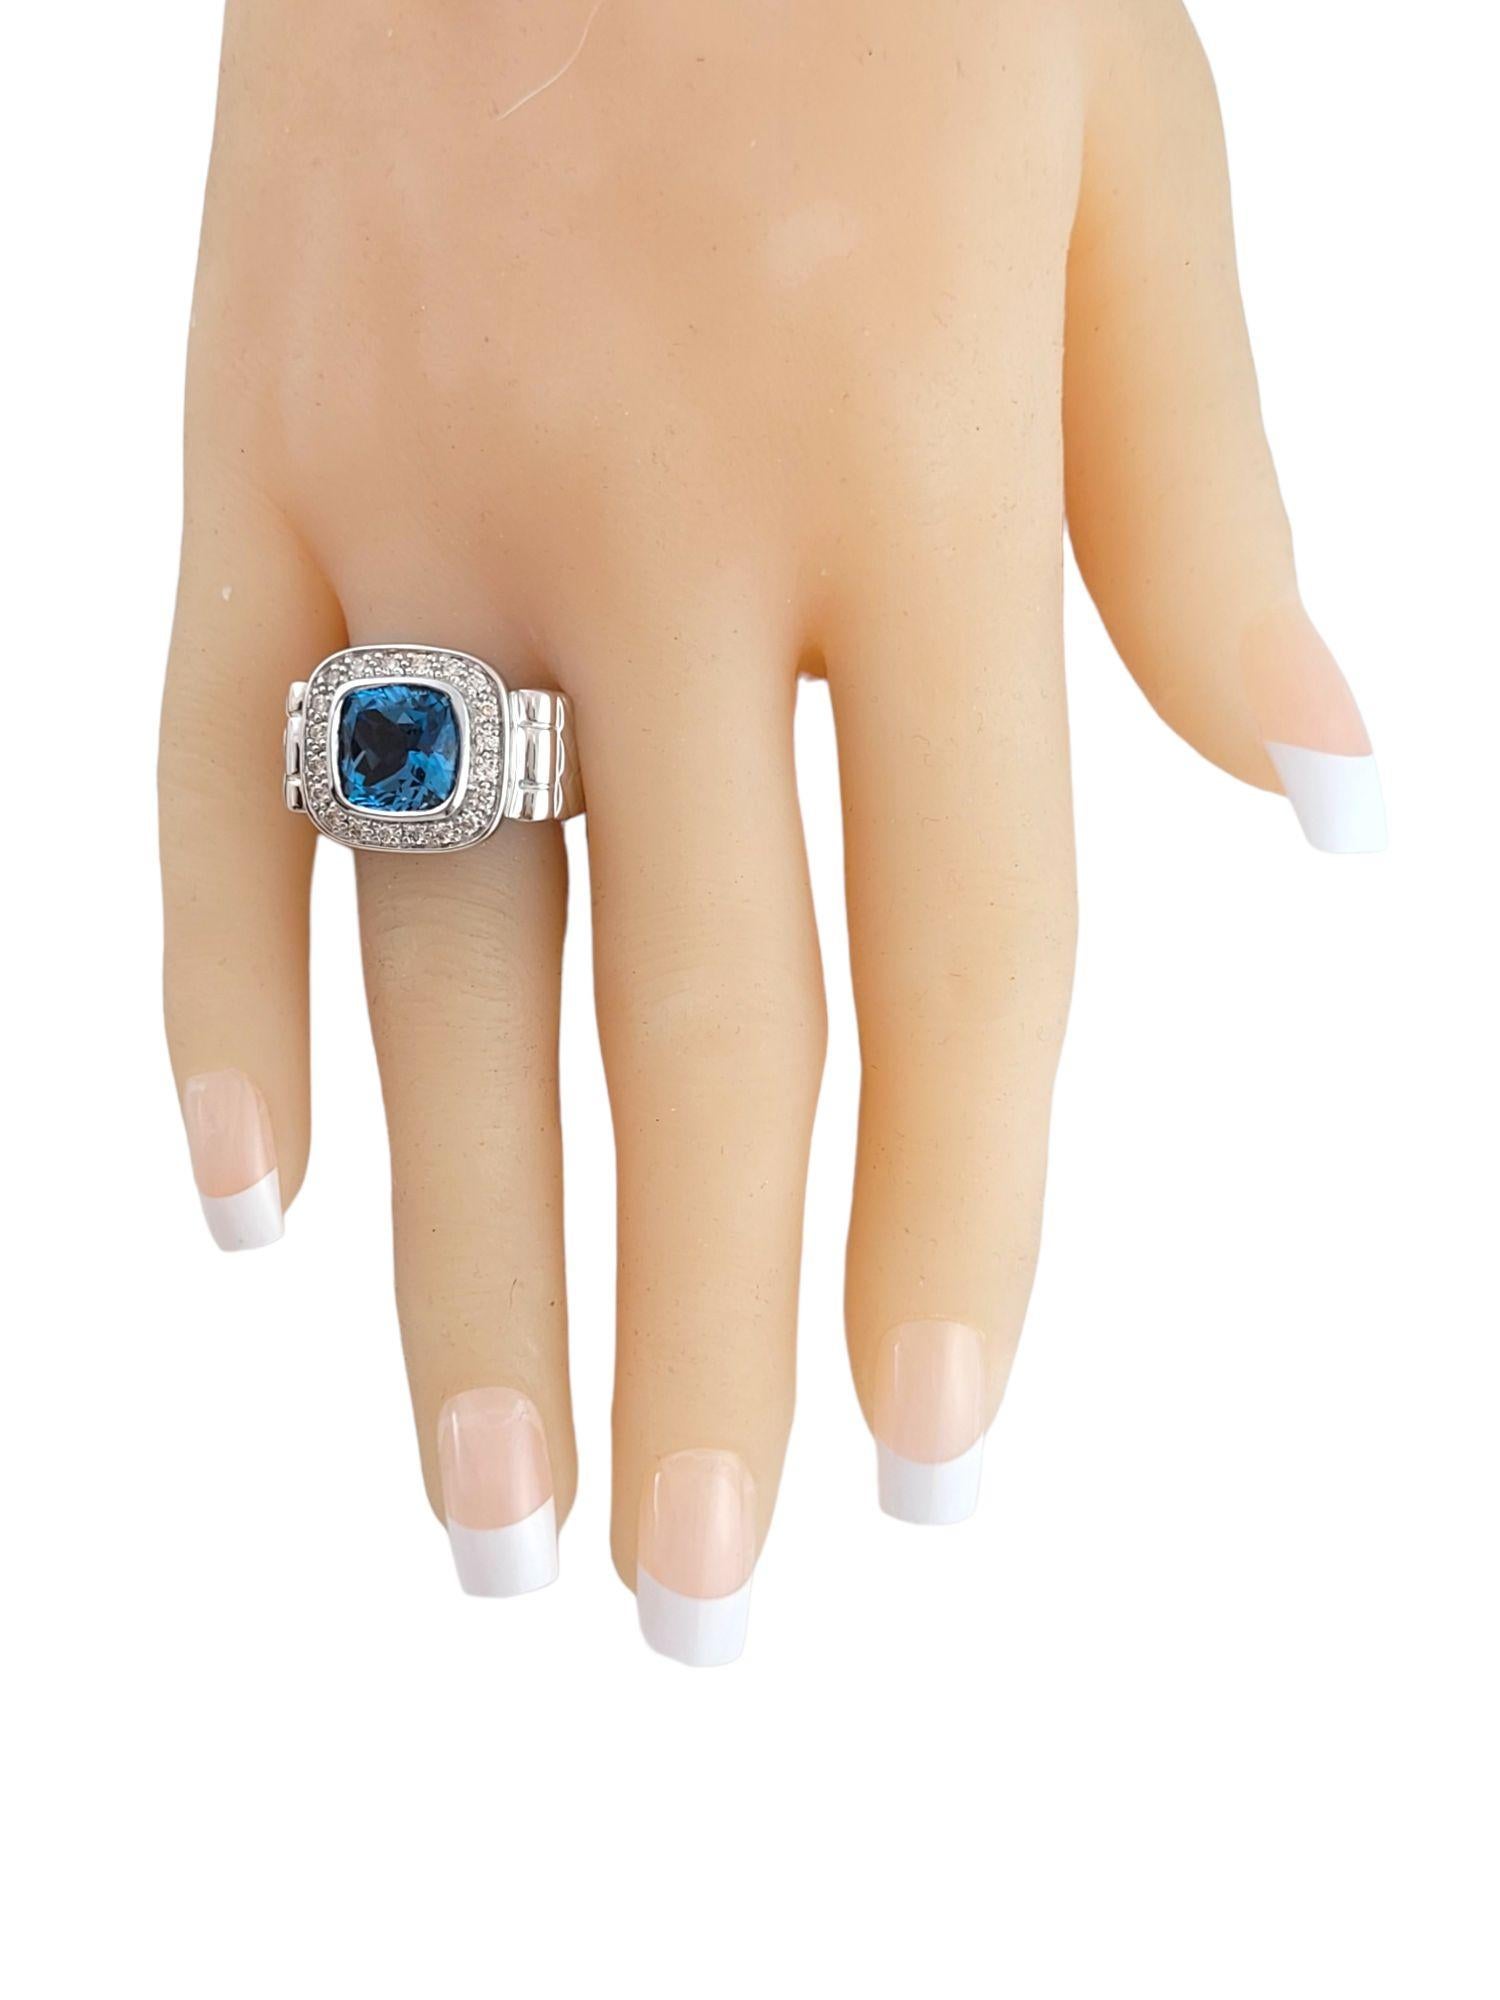 14K White Gold Blue Topaz Diamond Halo Cocktail Ring Size 7 #14765 For Sale 1